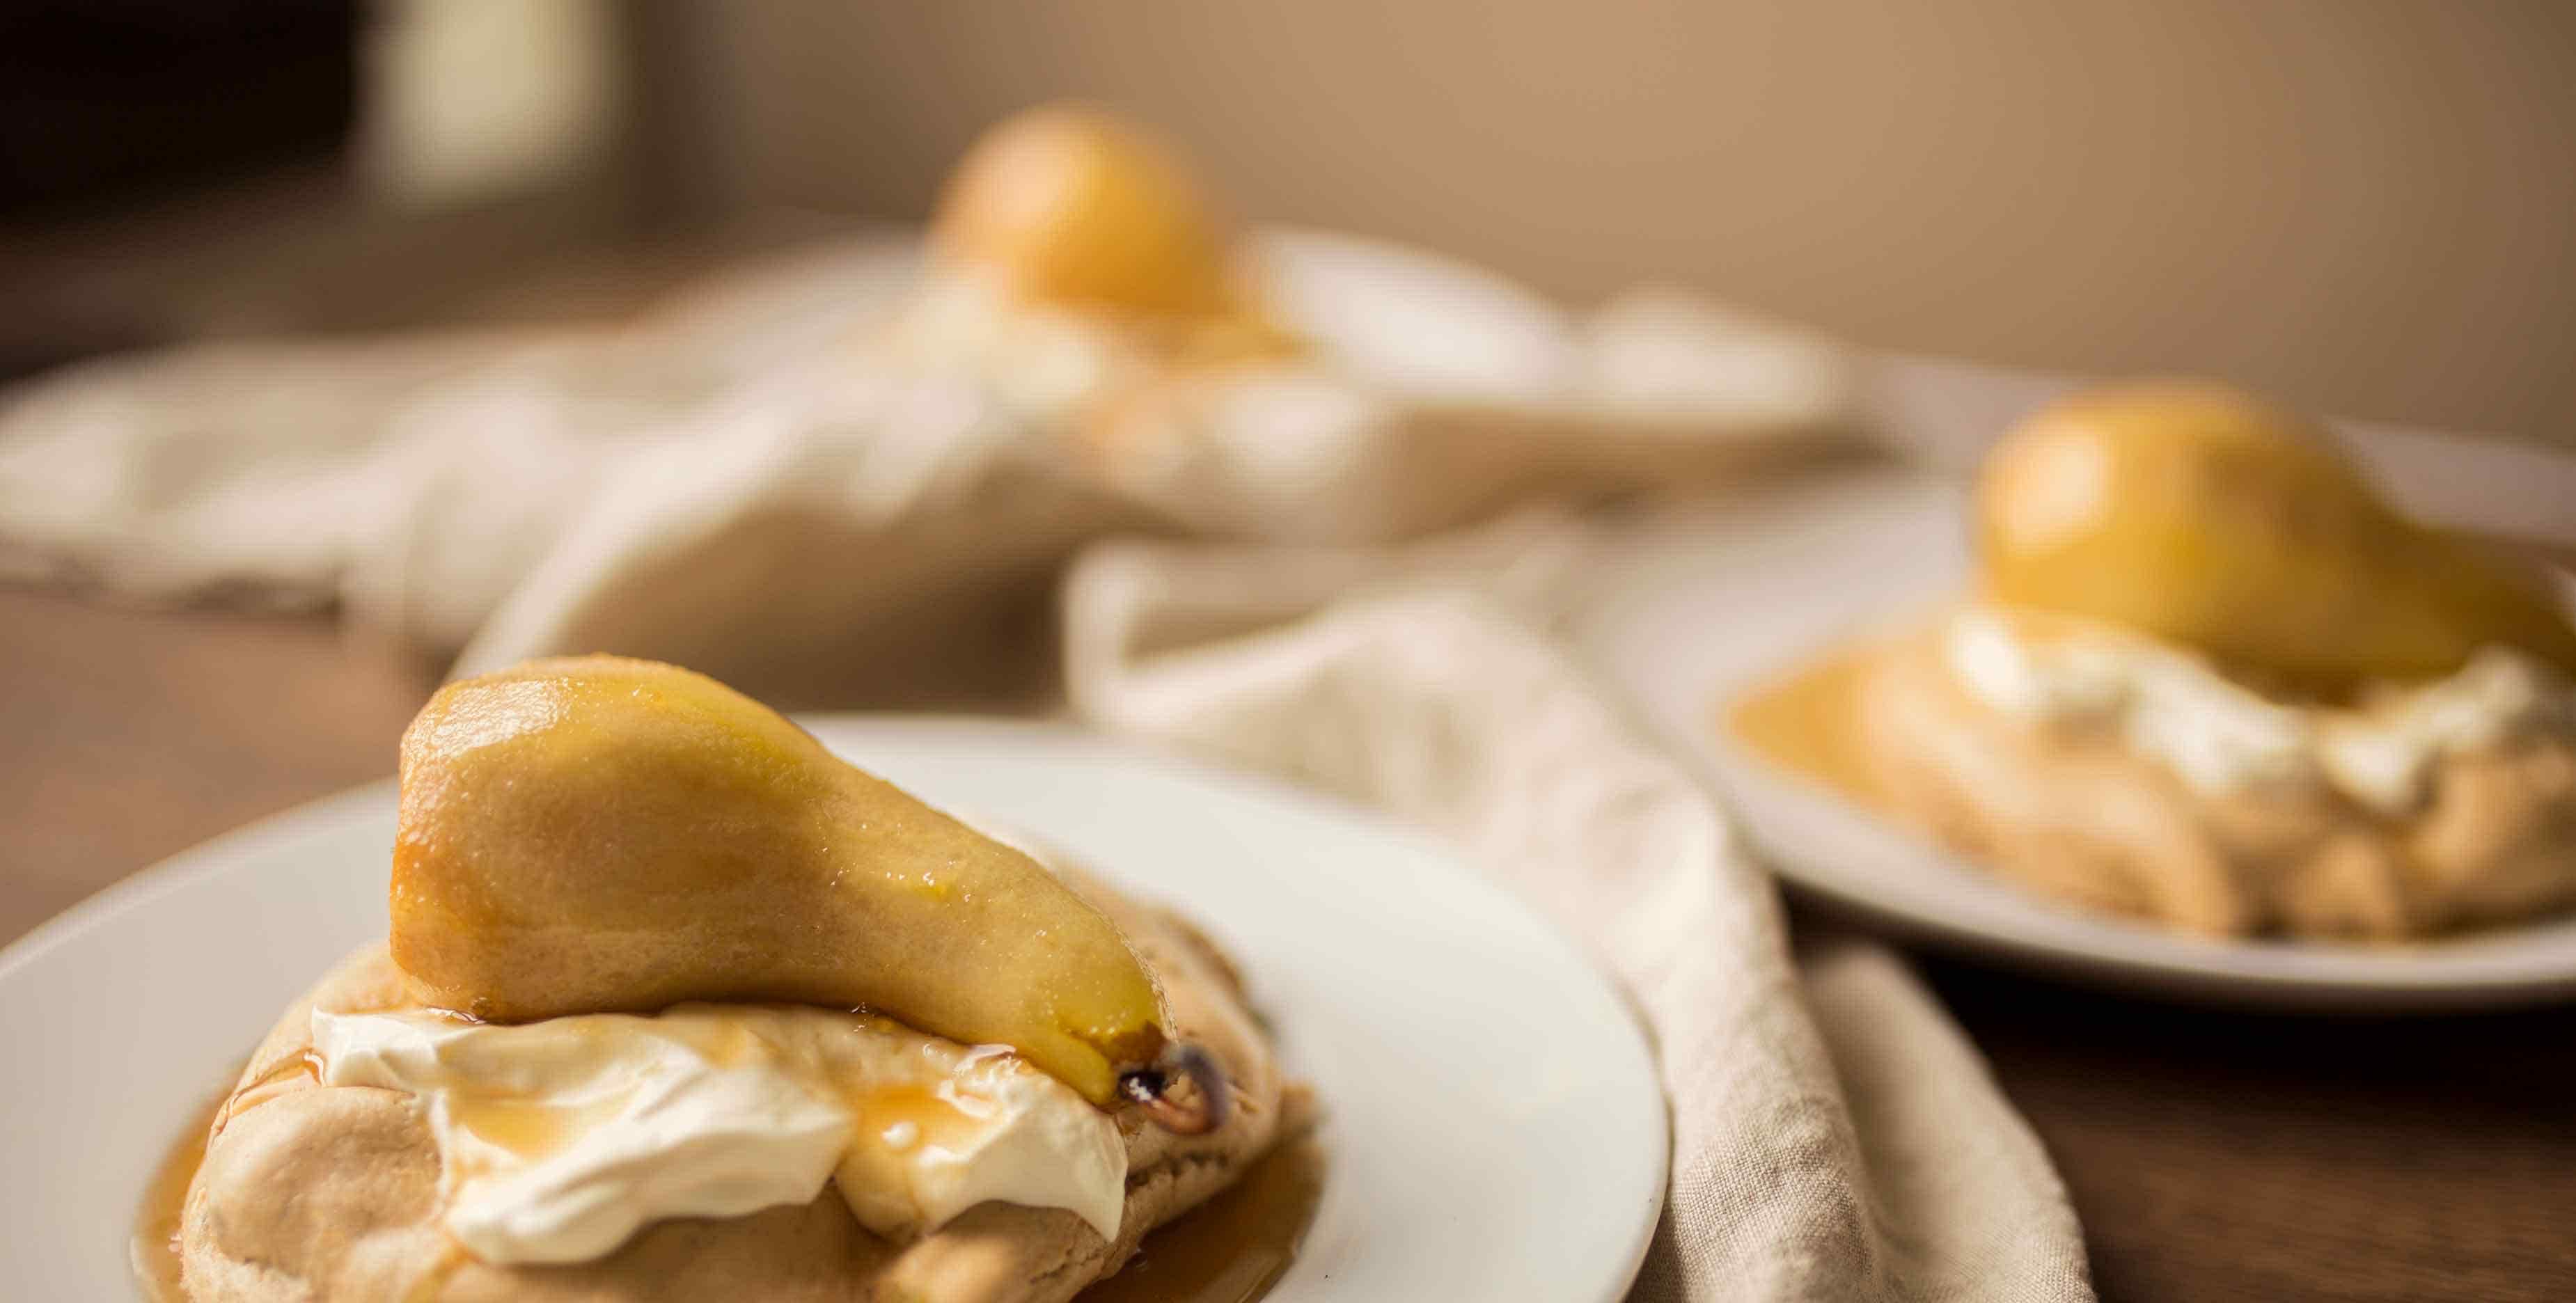 Pears poached in oolong tea, with brown sugar meringue.